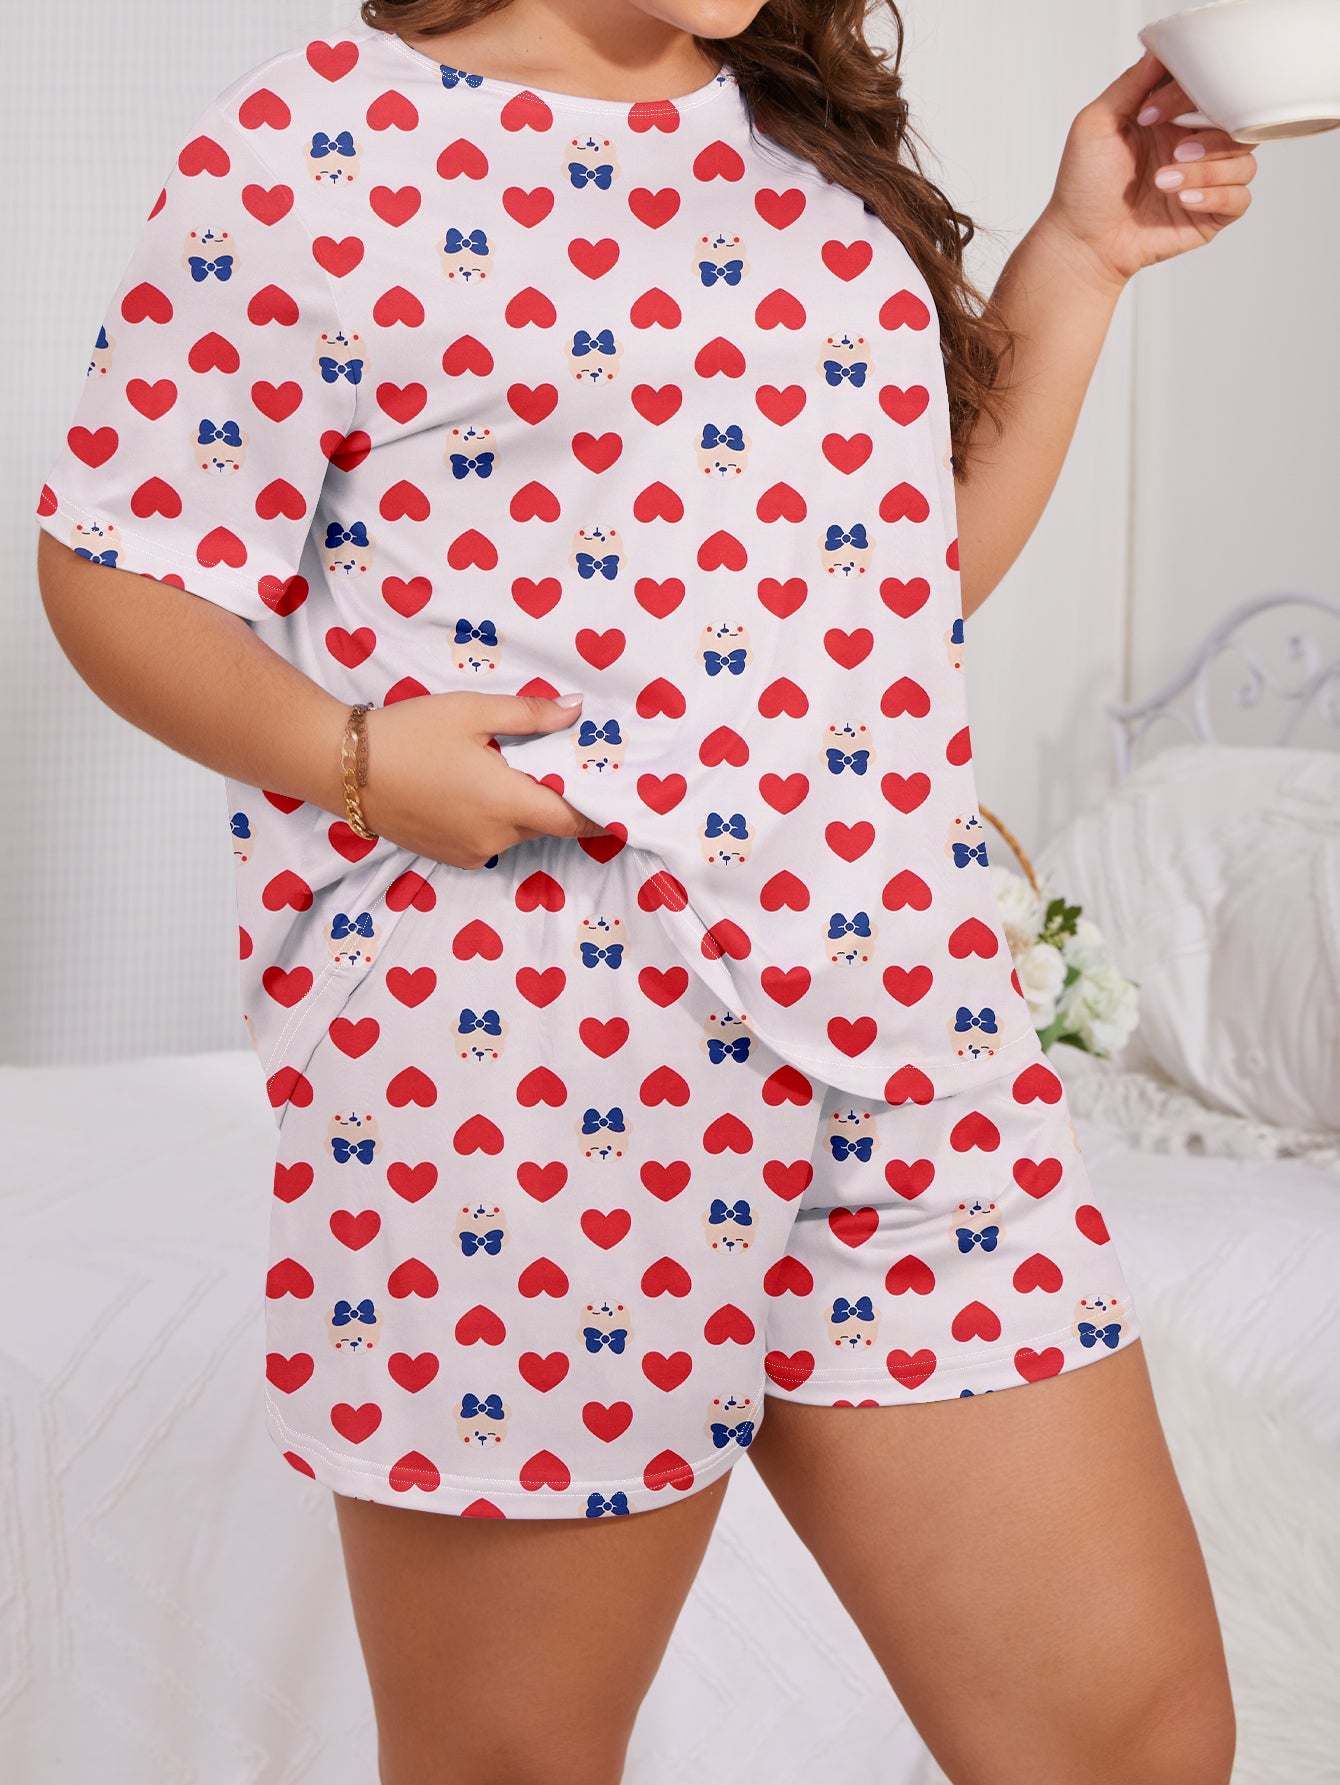 Women's Plus Size Valentine's Day Cute Pajamas Set: Heart & Cartoon Print Short Sleeve Top & Shorts Lounge 2 Piece Set